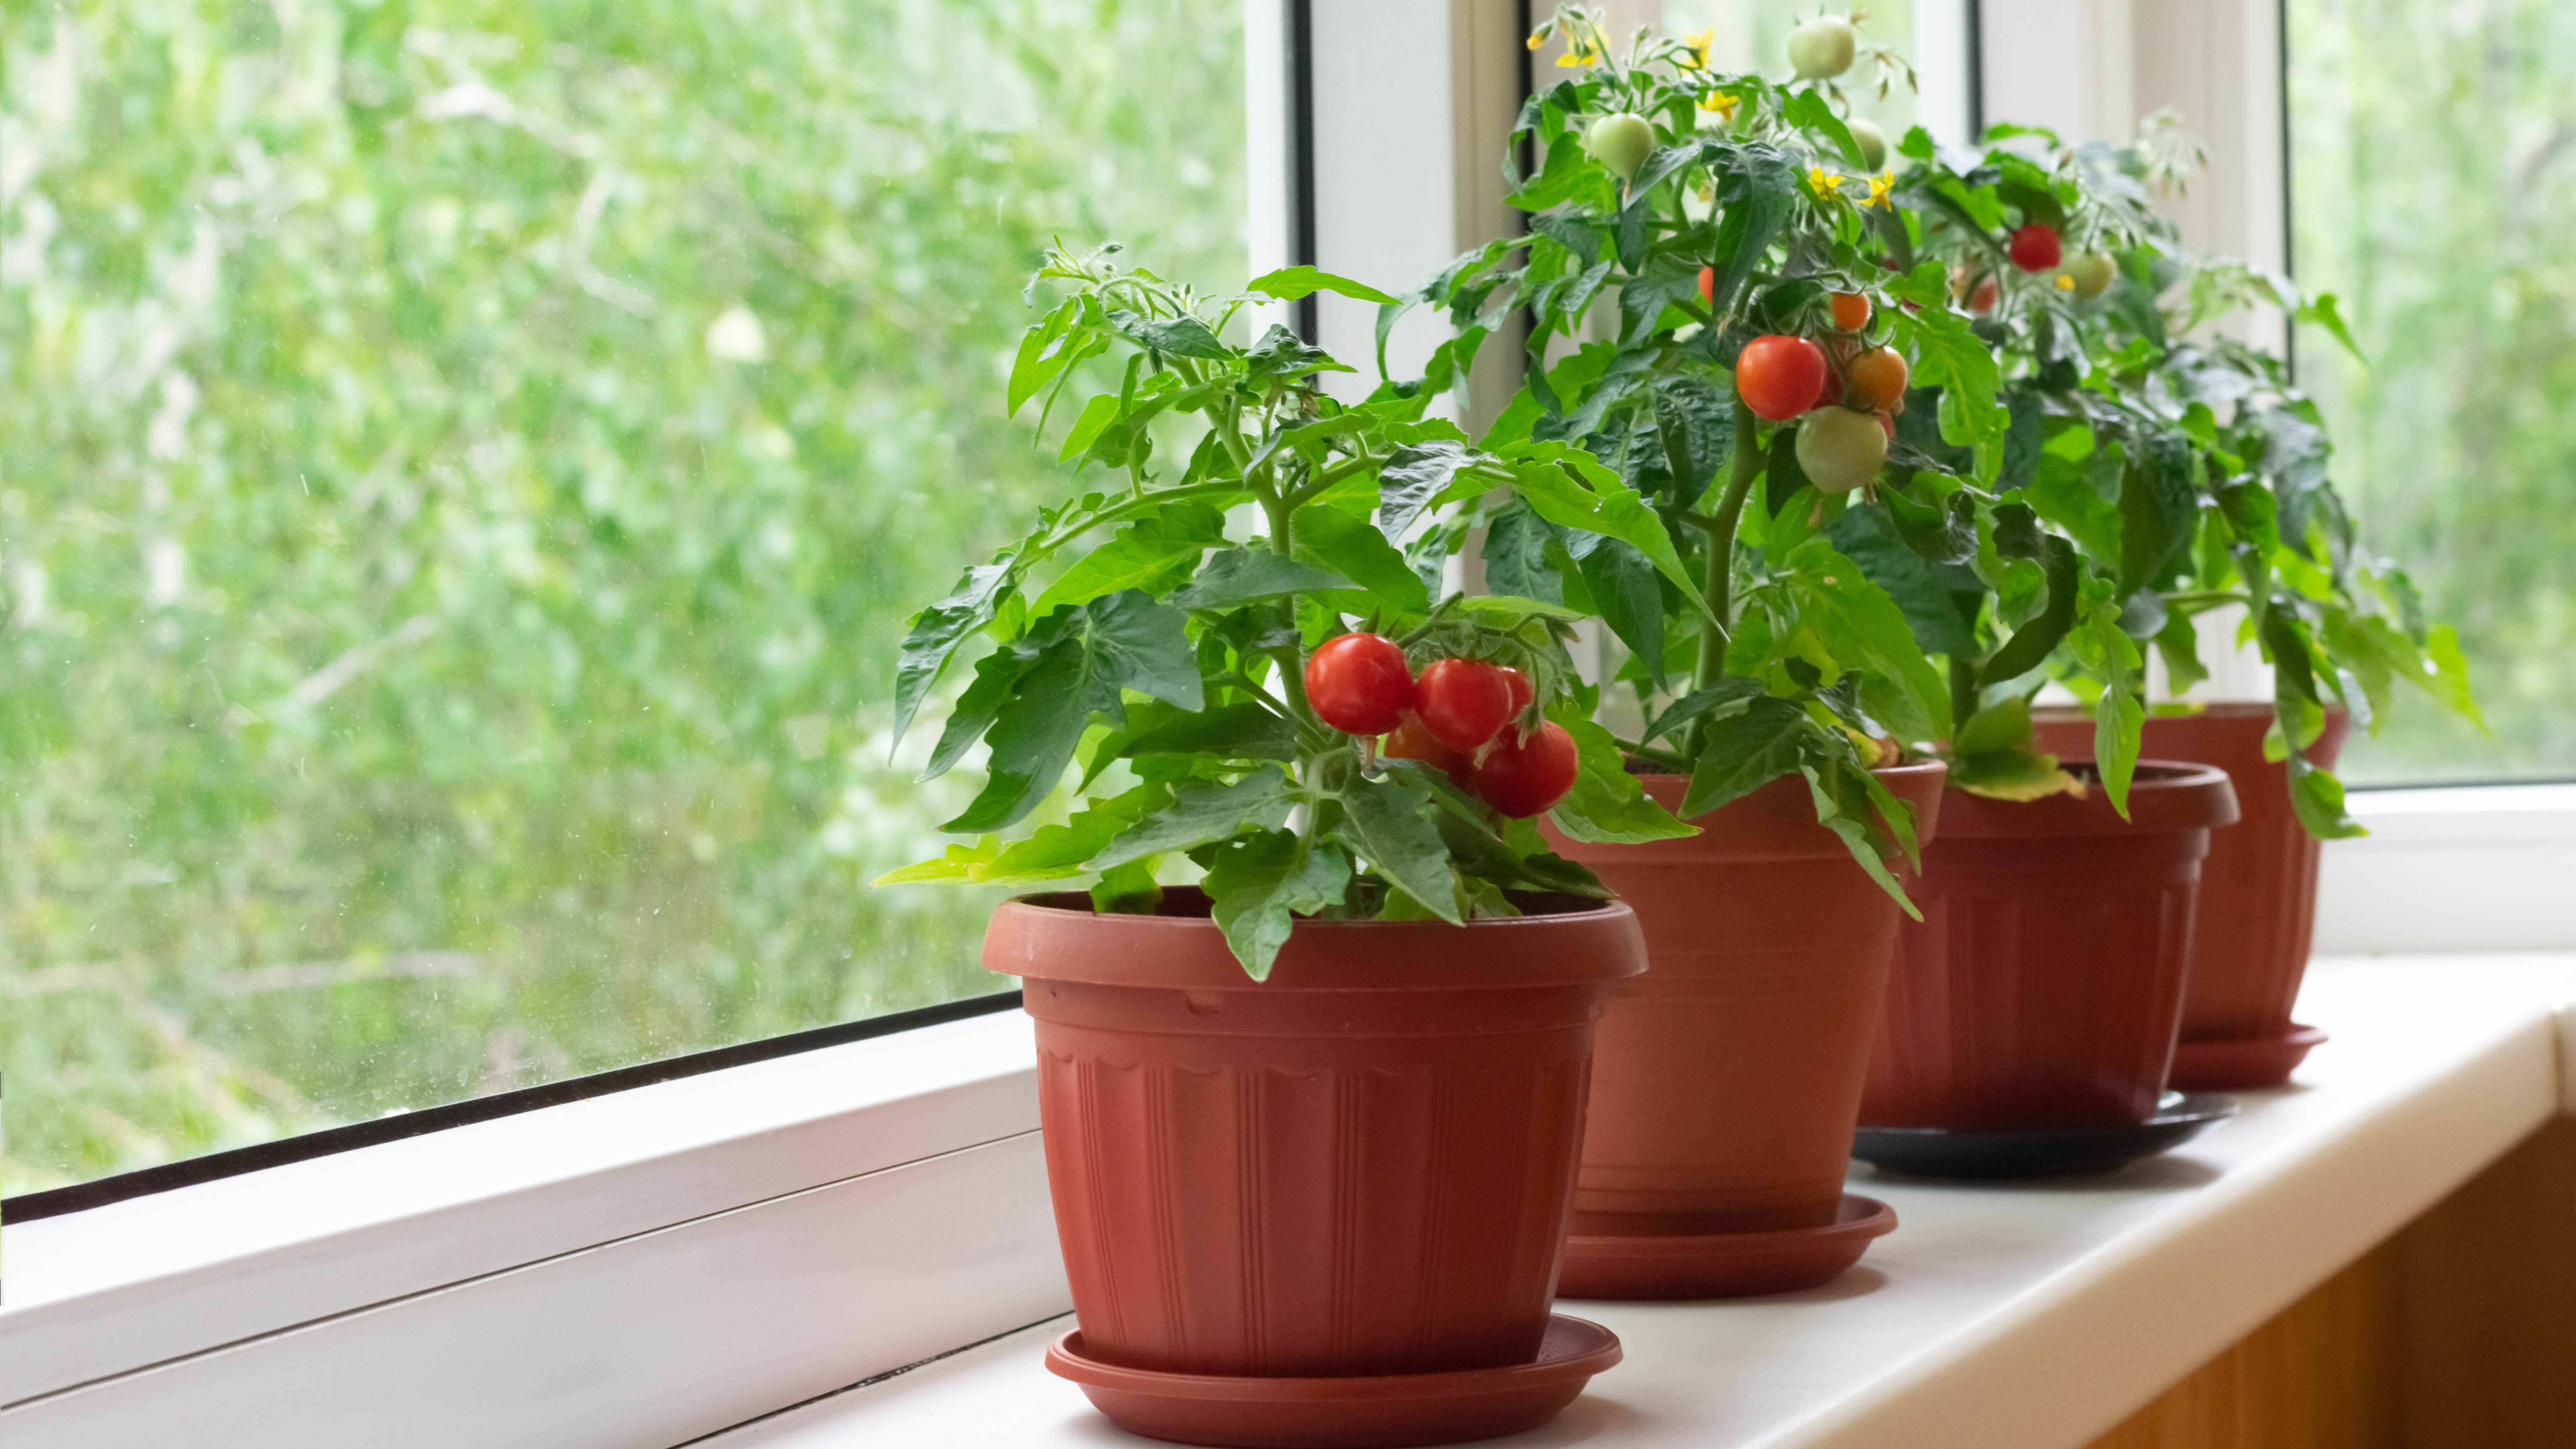 Tomato plants in pots on the windowsill